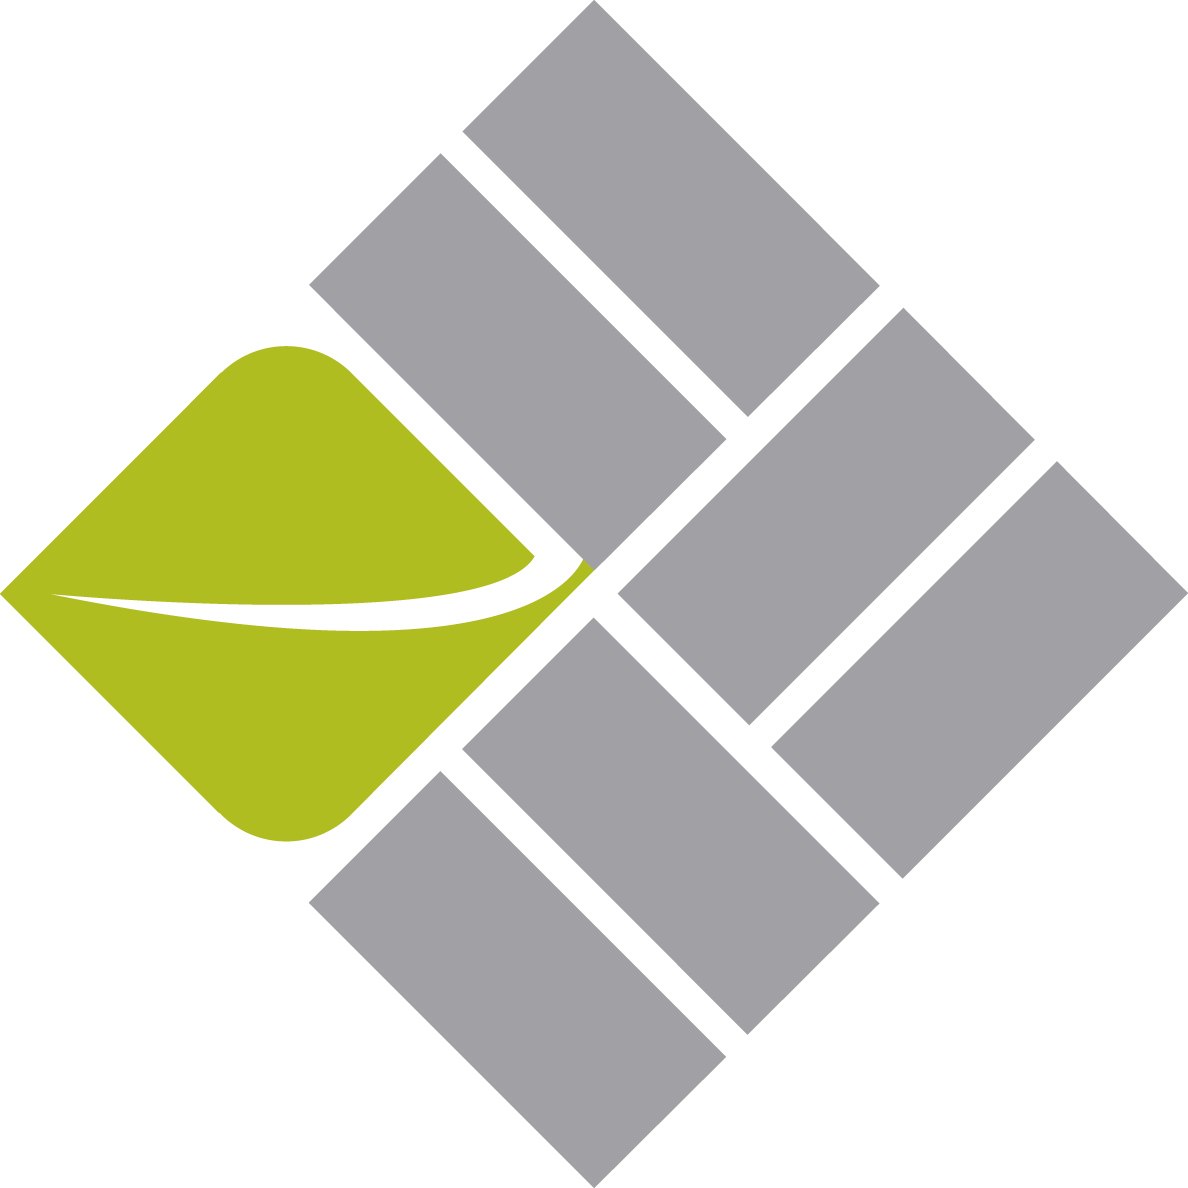 Custom Pavers & Design, LLC Logo